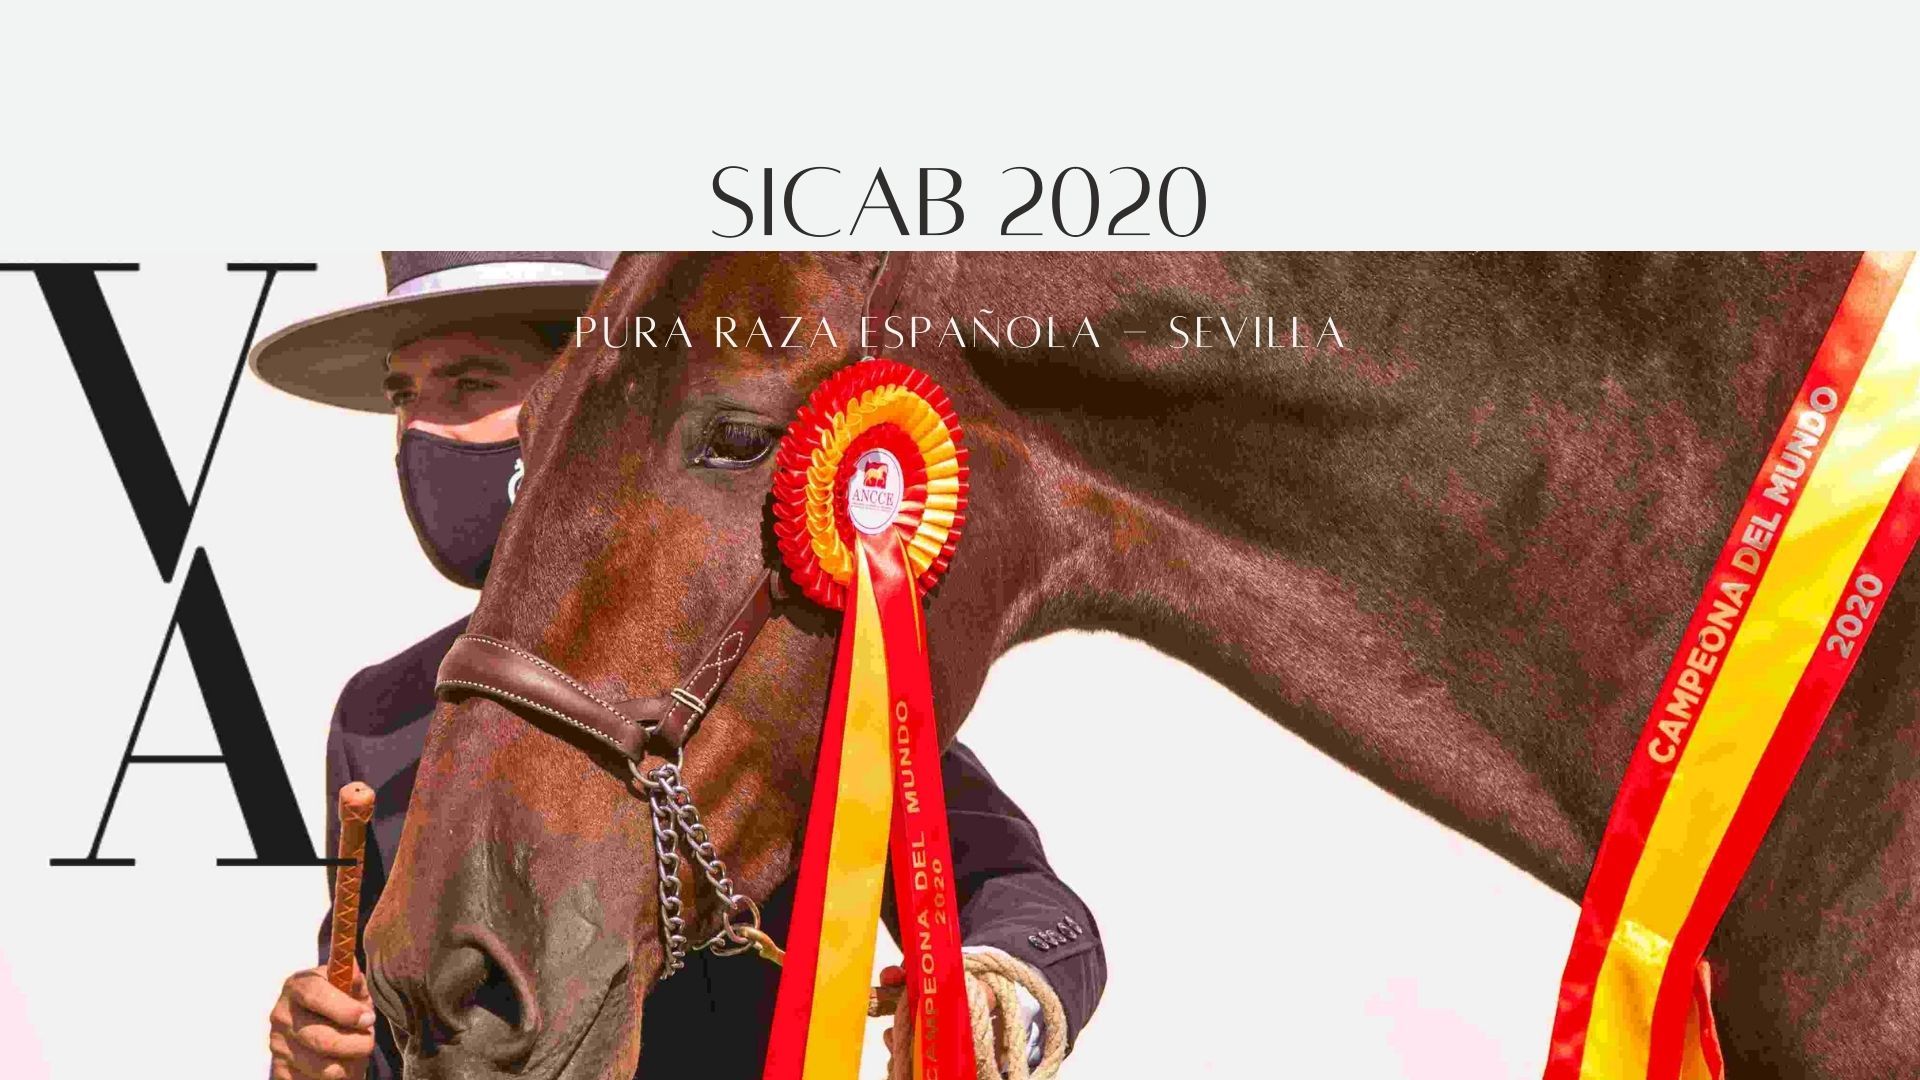 SICAB 2020